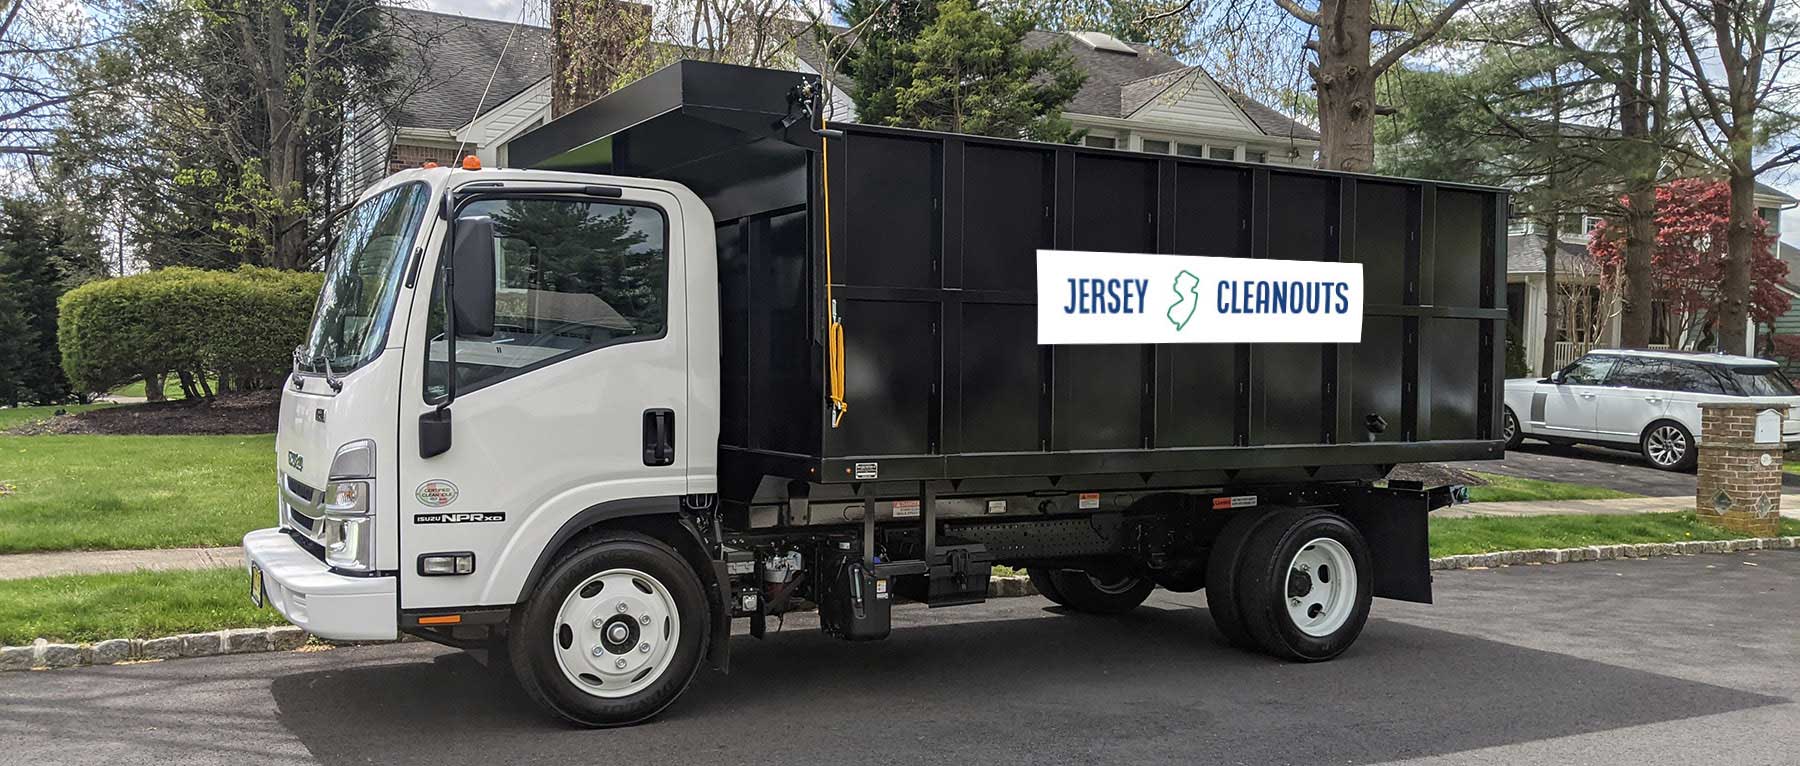 jersey-cleanouts-truck-5-copy